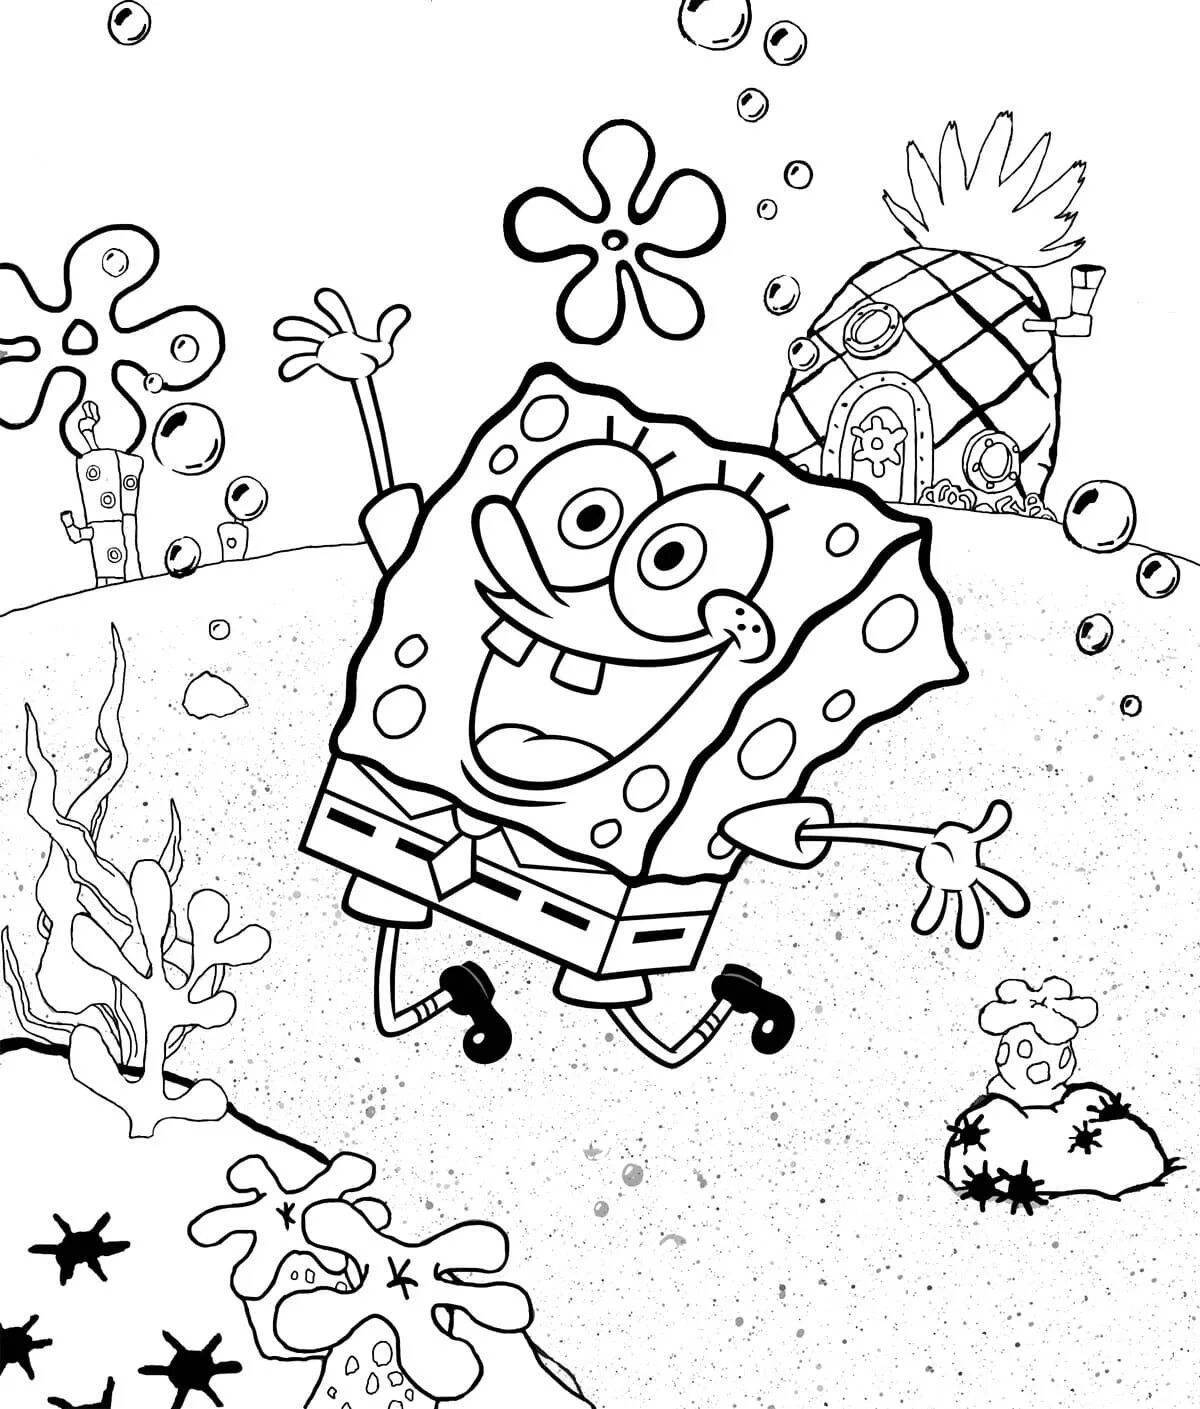 Spongebob and friends #5